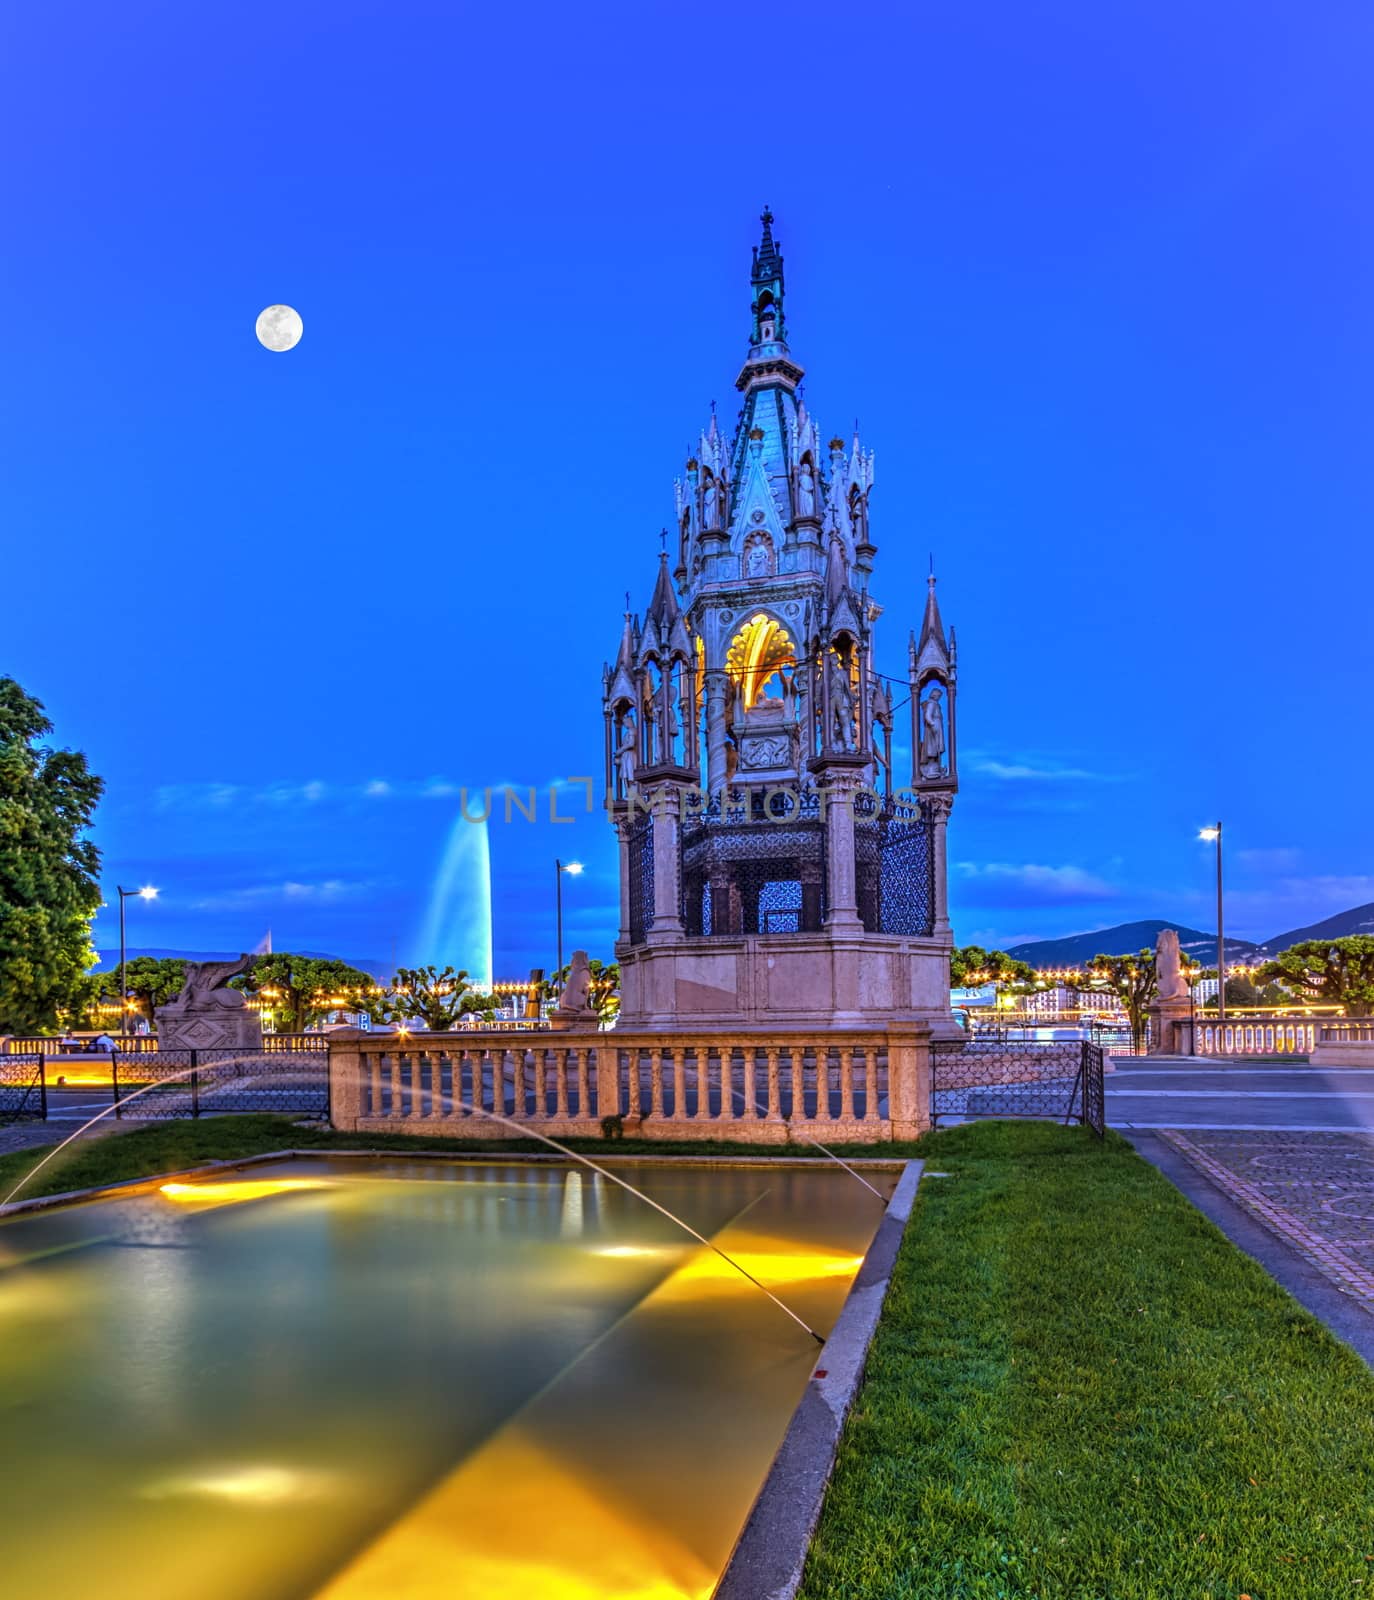 Brunswick monument and fountain, Geneva, Switzerland, HDR by Elenaphotos21